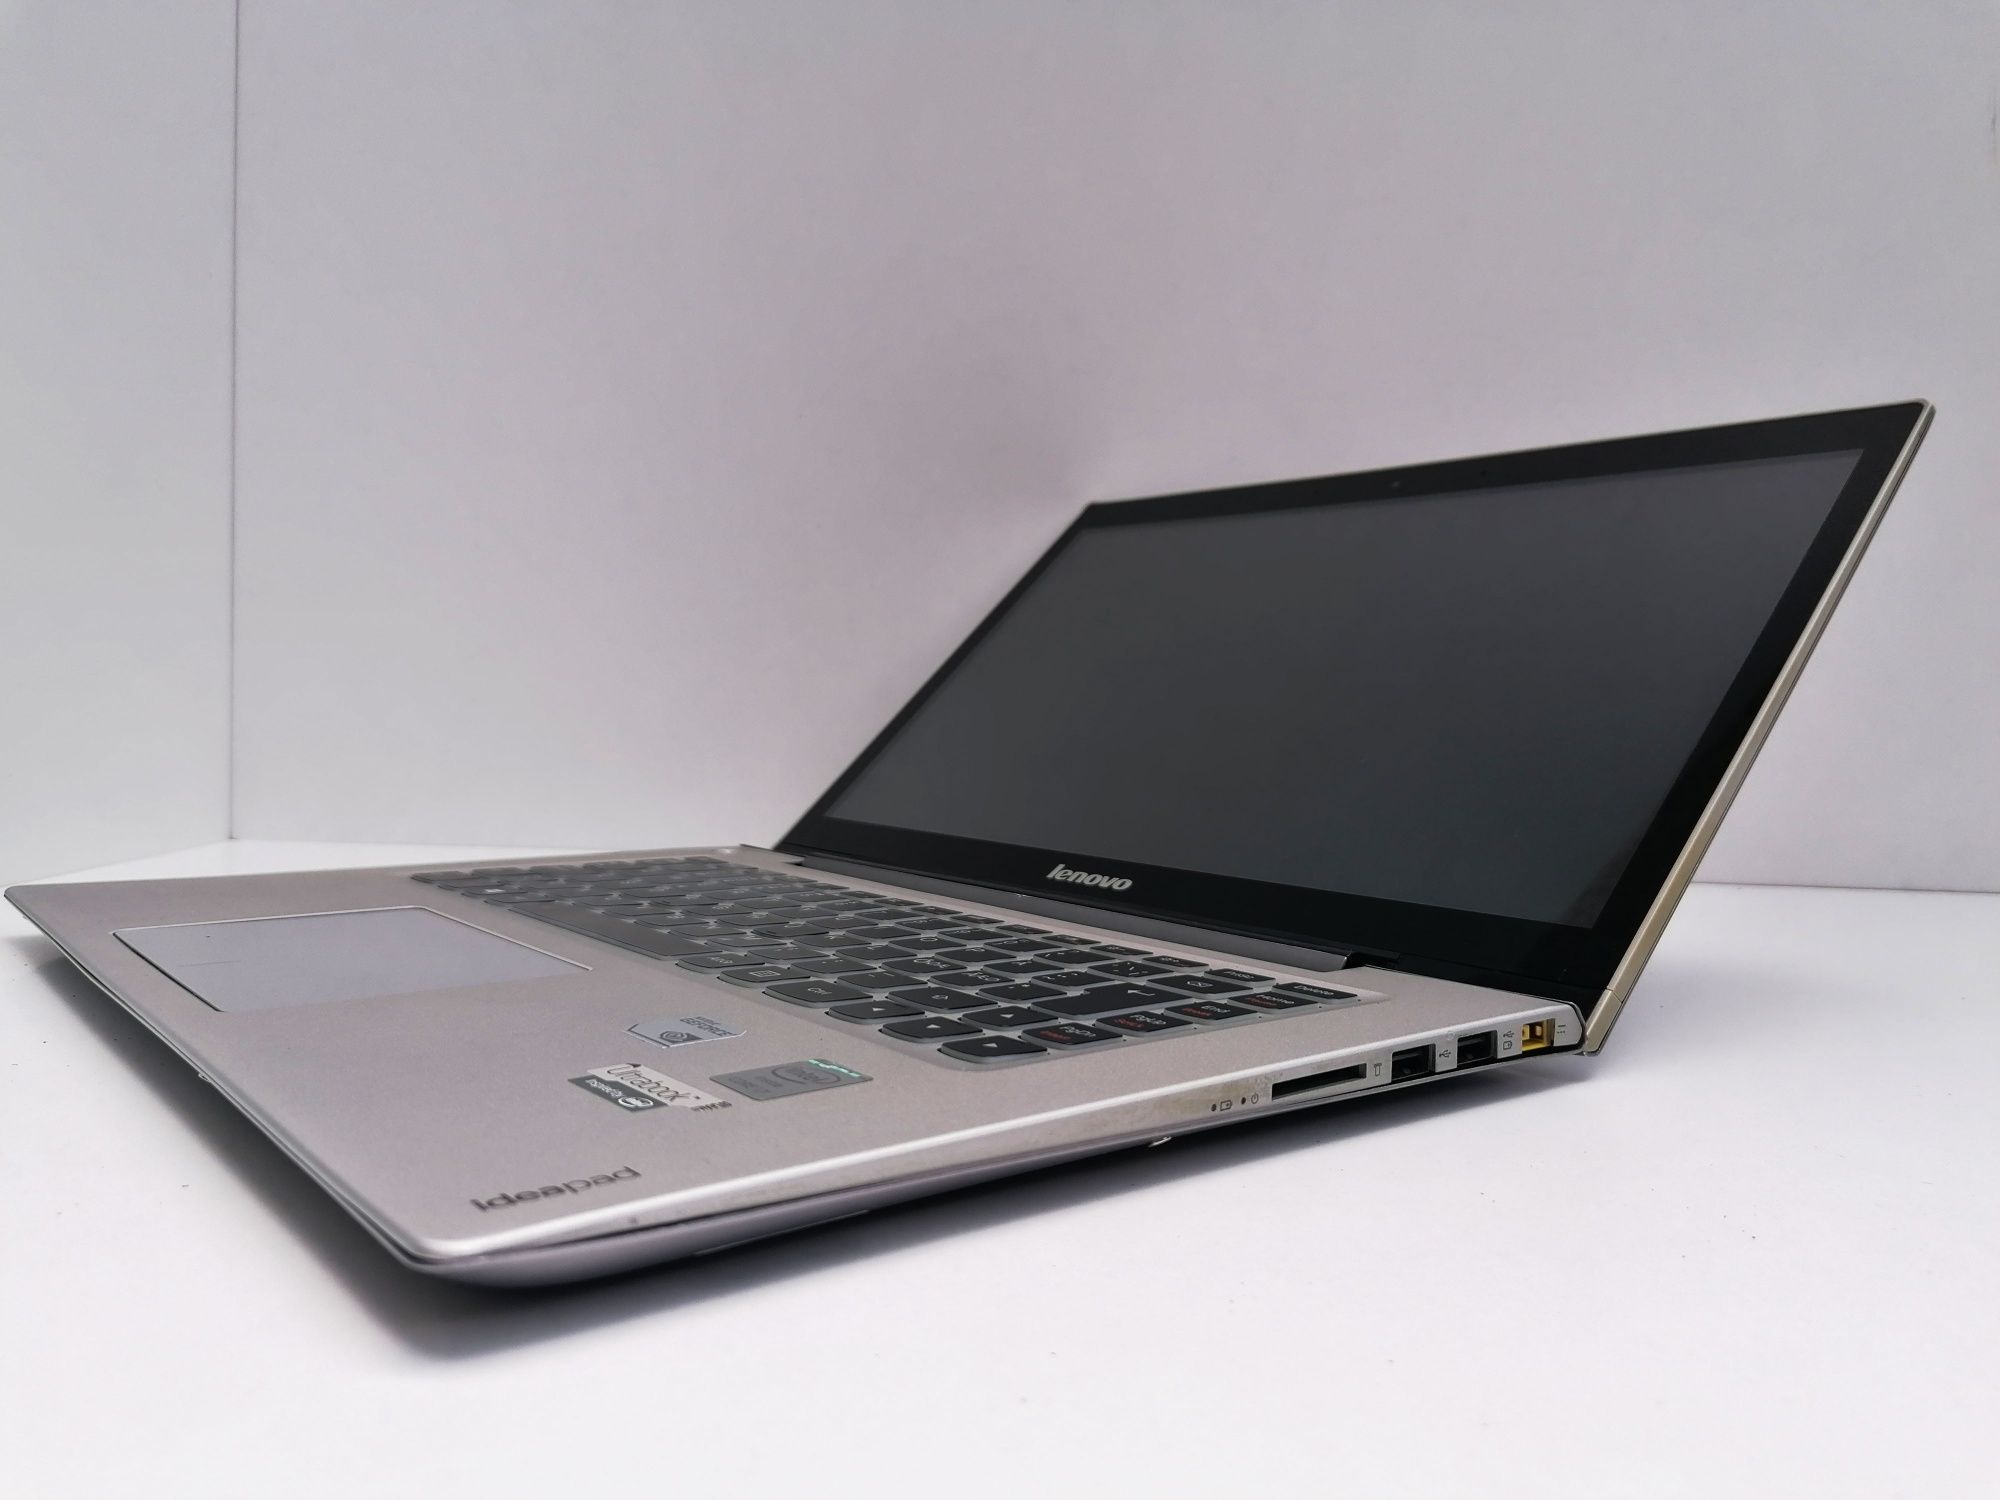 Lenovo IdeaPad U430 Touch- i7 4500U, nVidia GeForce,128GB SSD, 8GB RAM